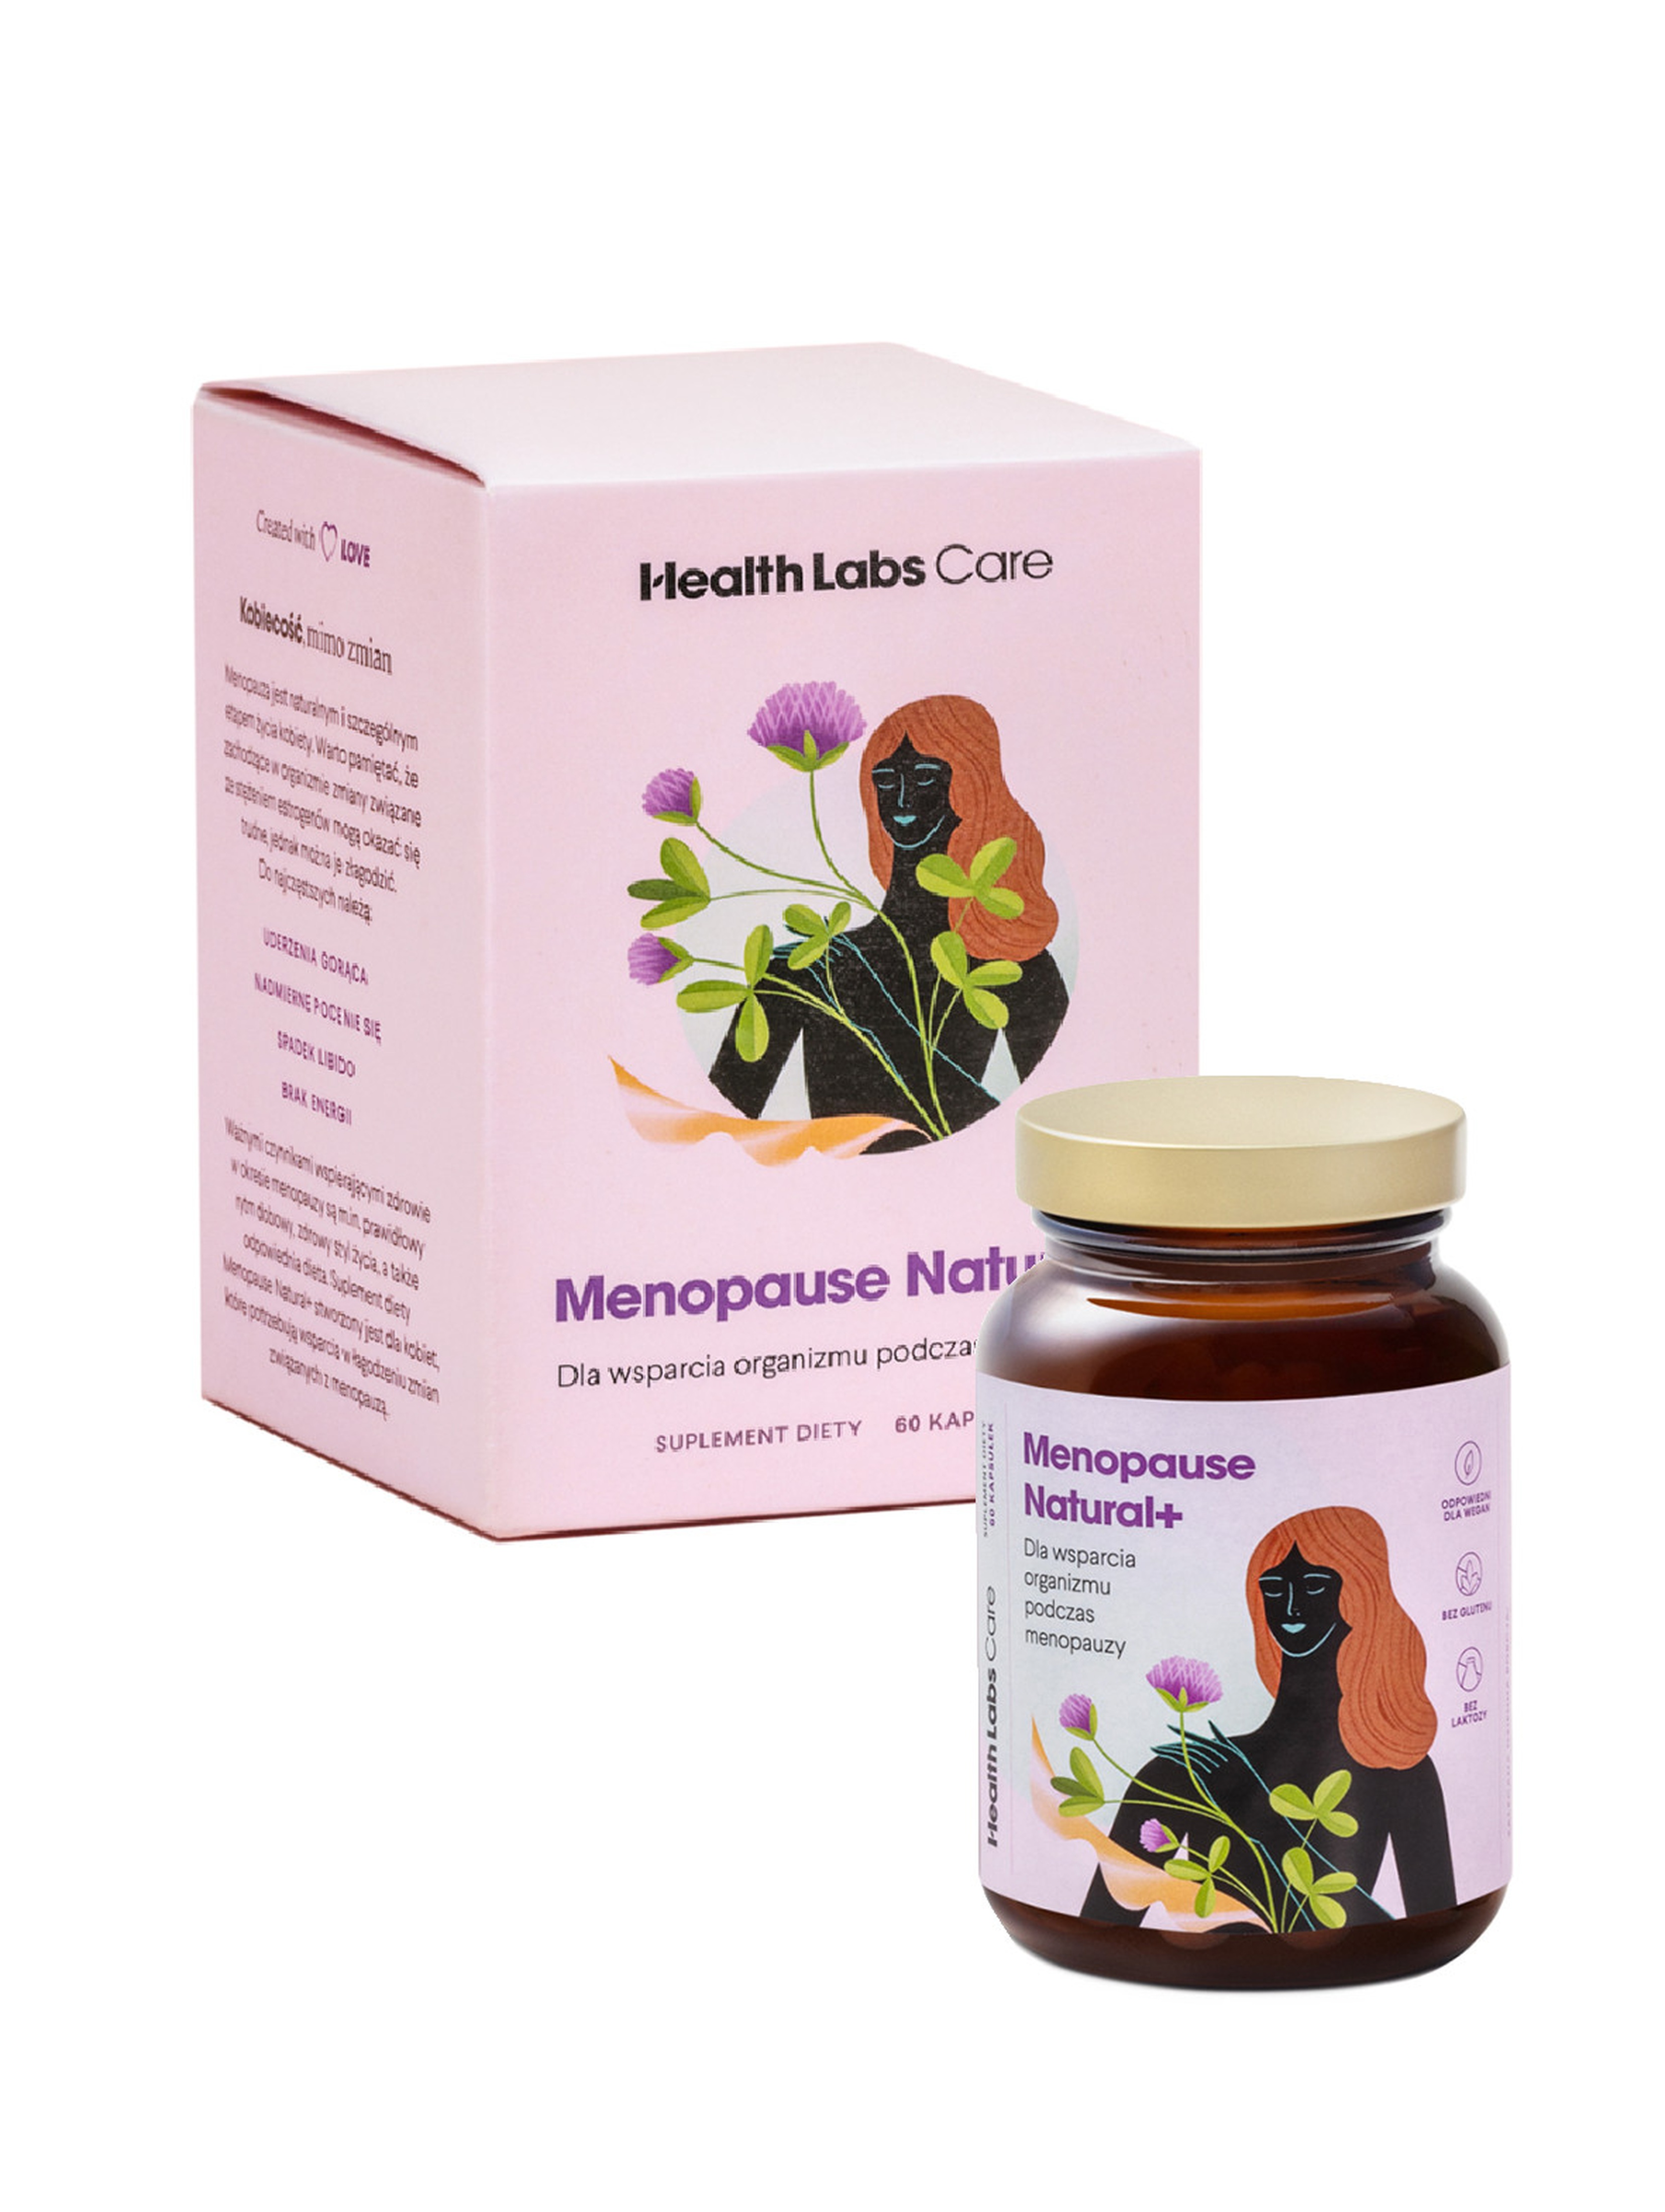 Health Labs Care Menopause Natural+ 60 kapsułek